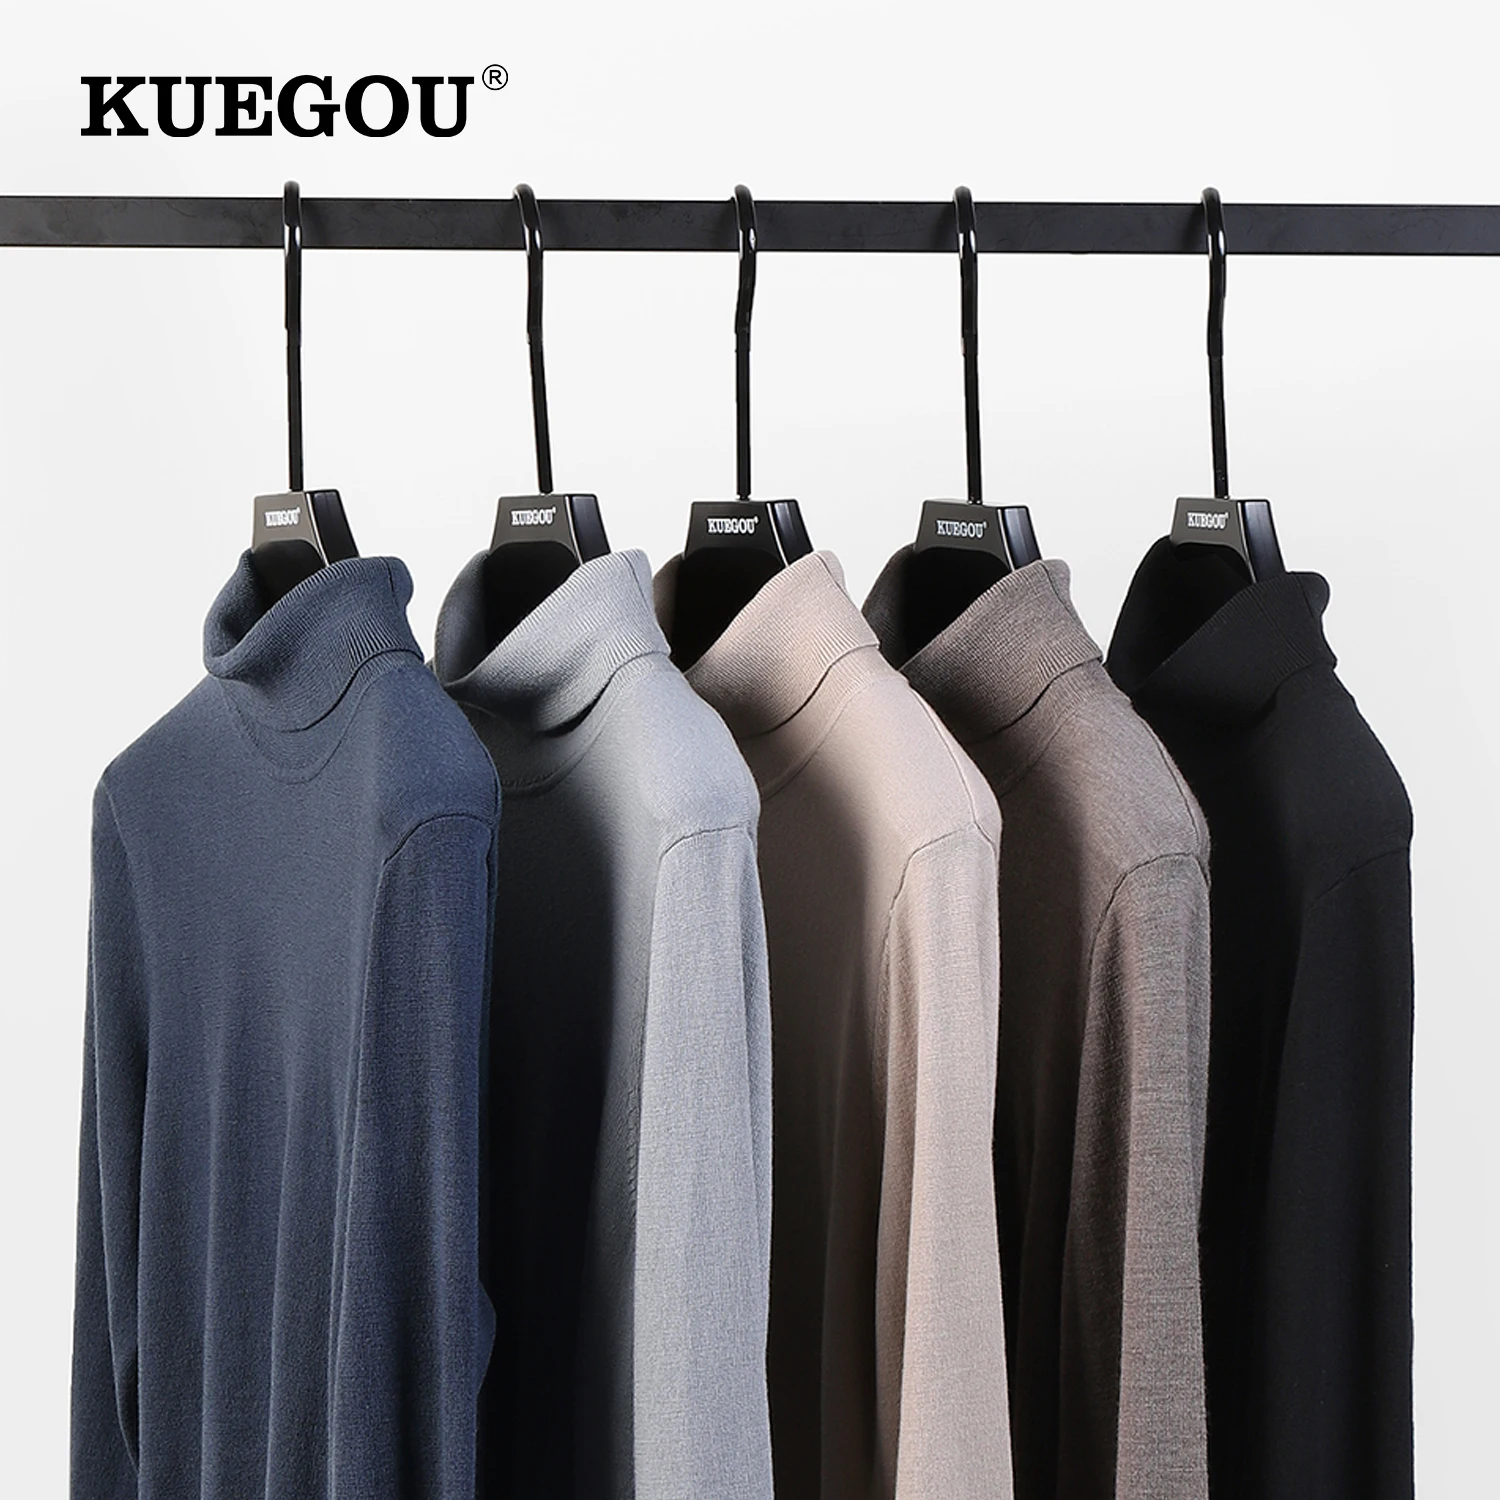 

KUEGOU 2022 Autumn Winter New Men's Turtleneck Sweater 100% Wool Warm High Quality Jumper Slim Fit Male Knitting Pullovers JX03